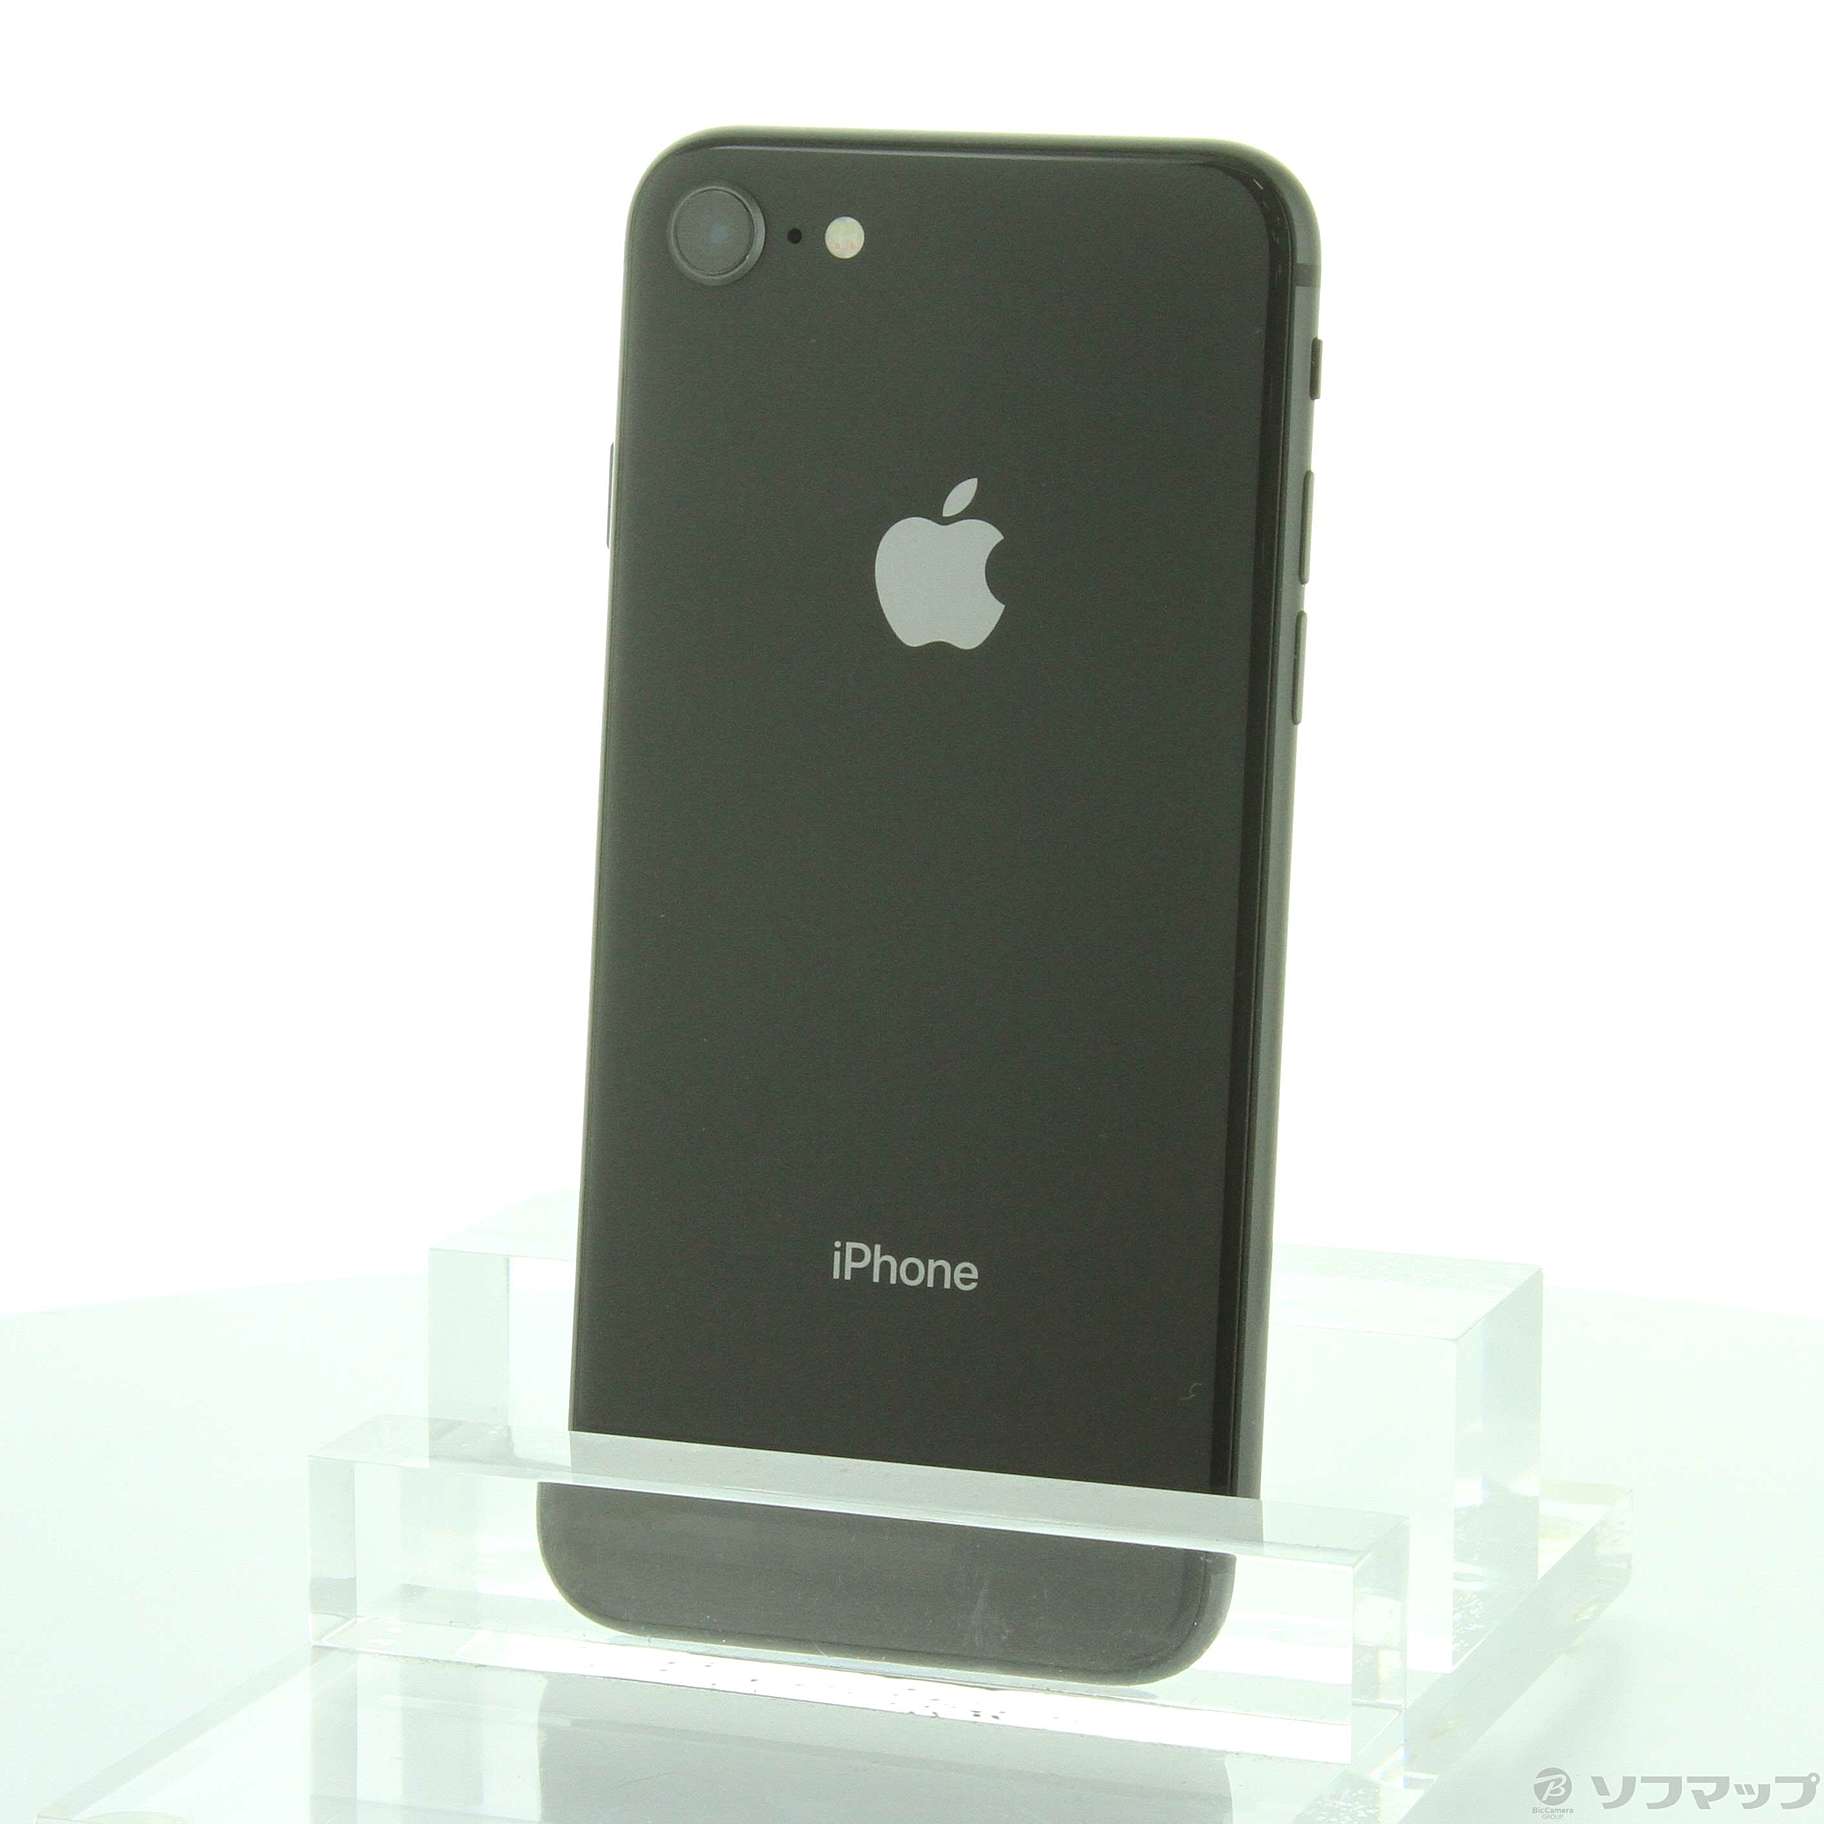 iPhone 8 Space Gray 64 GB au